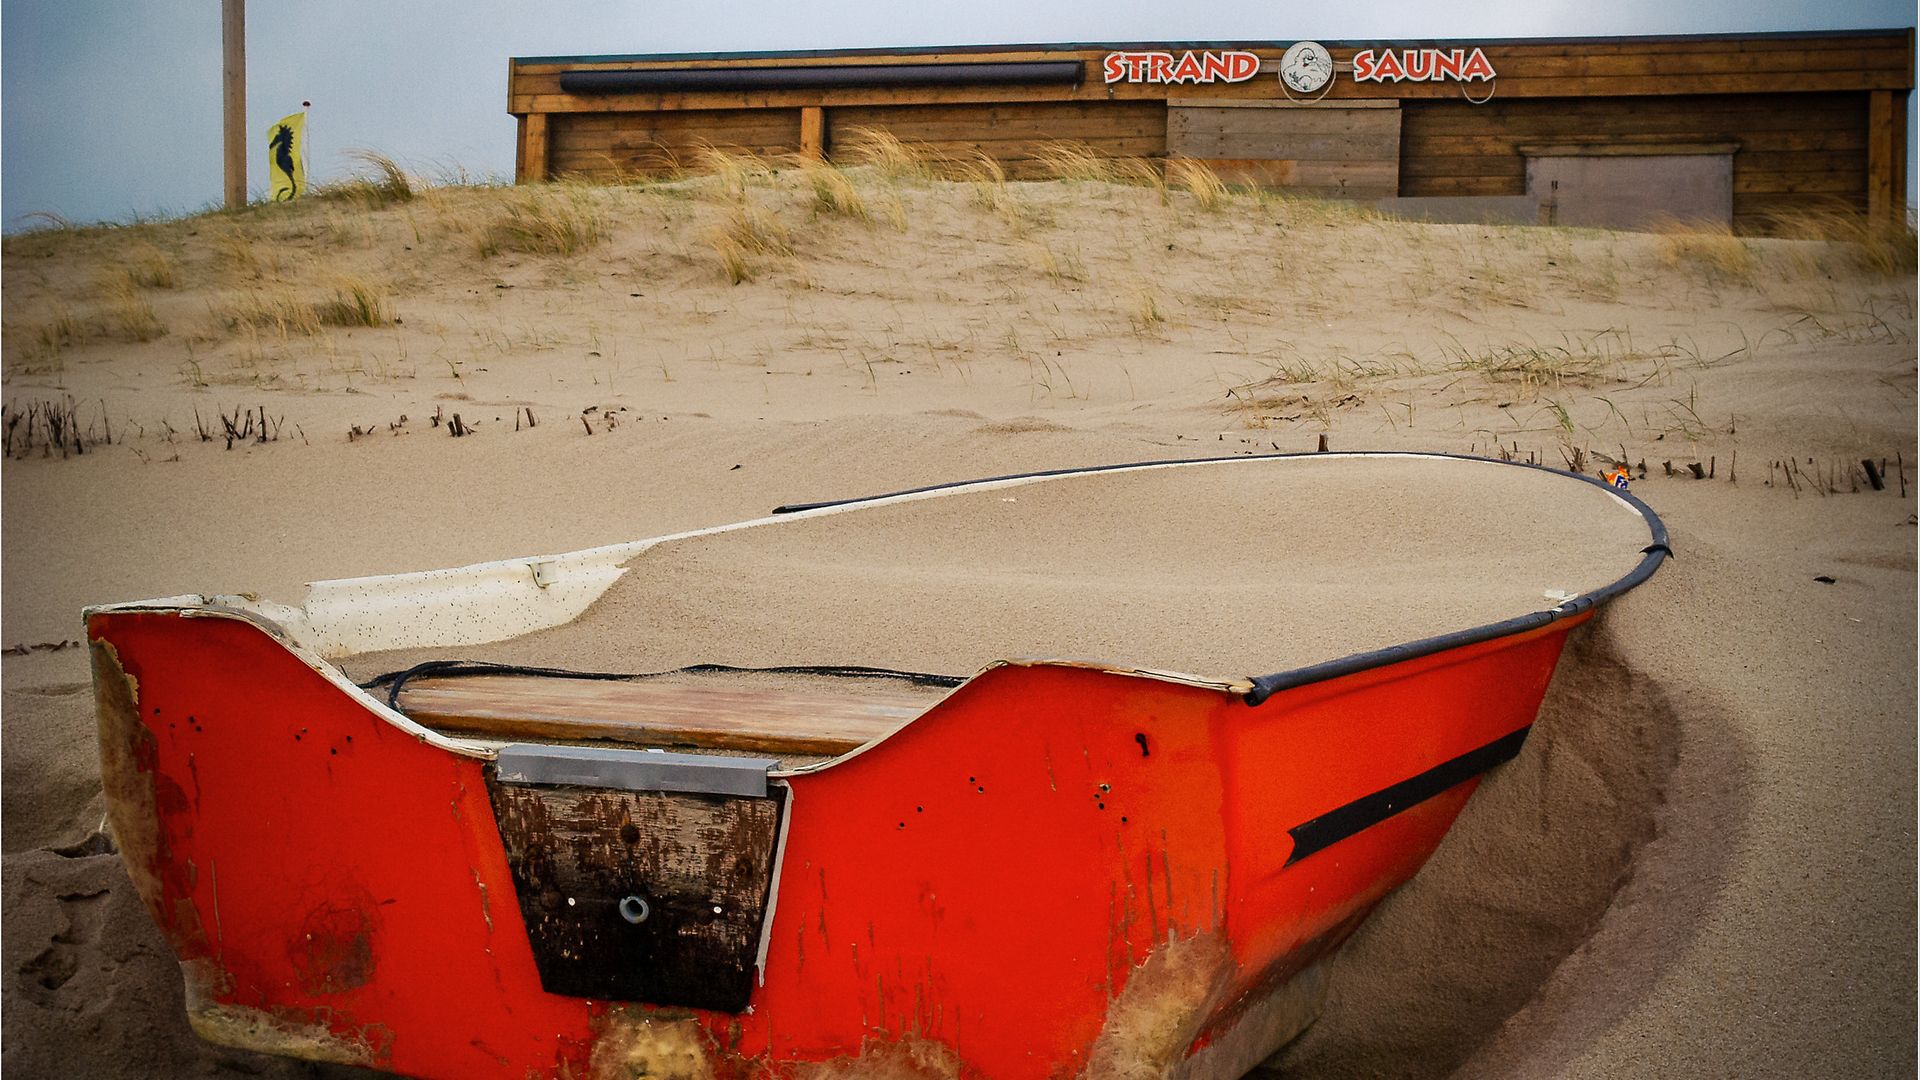 Rotes Ruderboot im Sand versunken